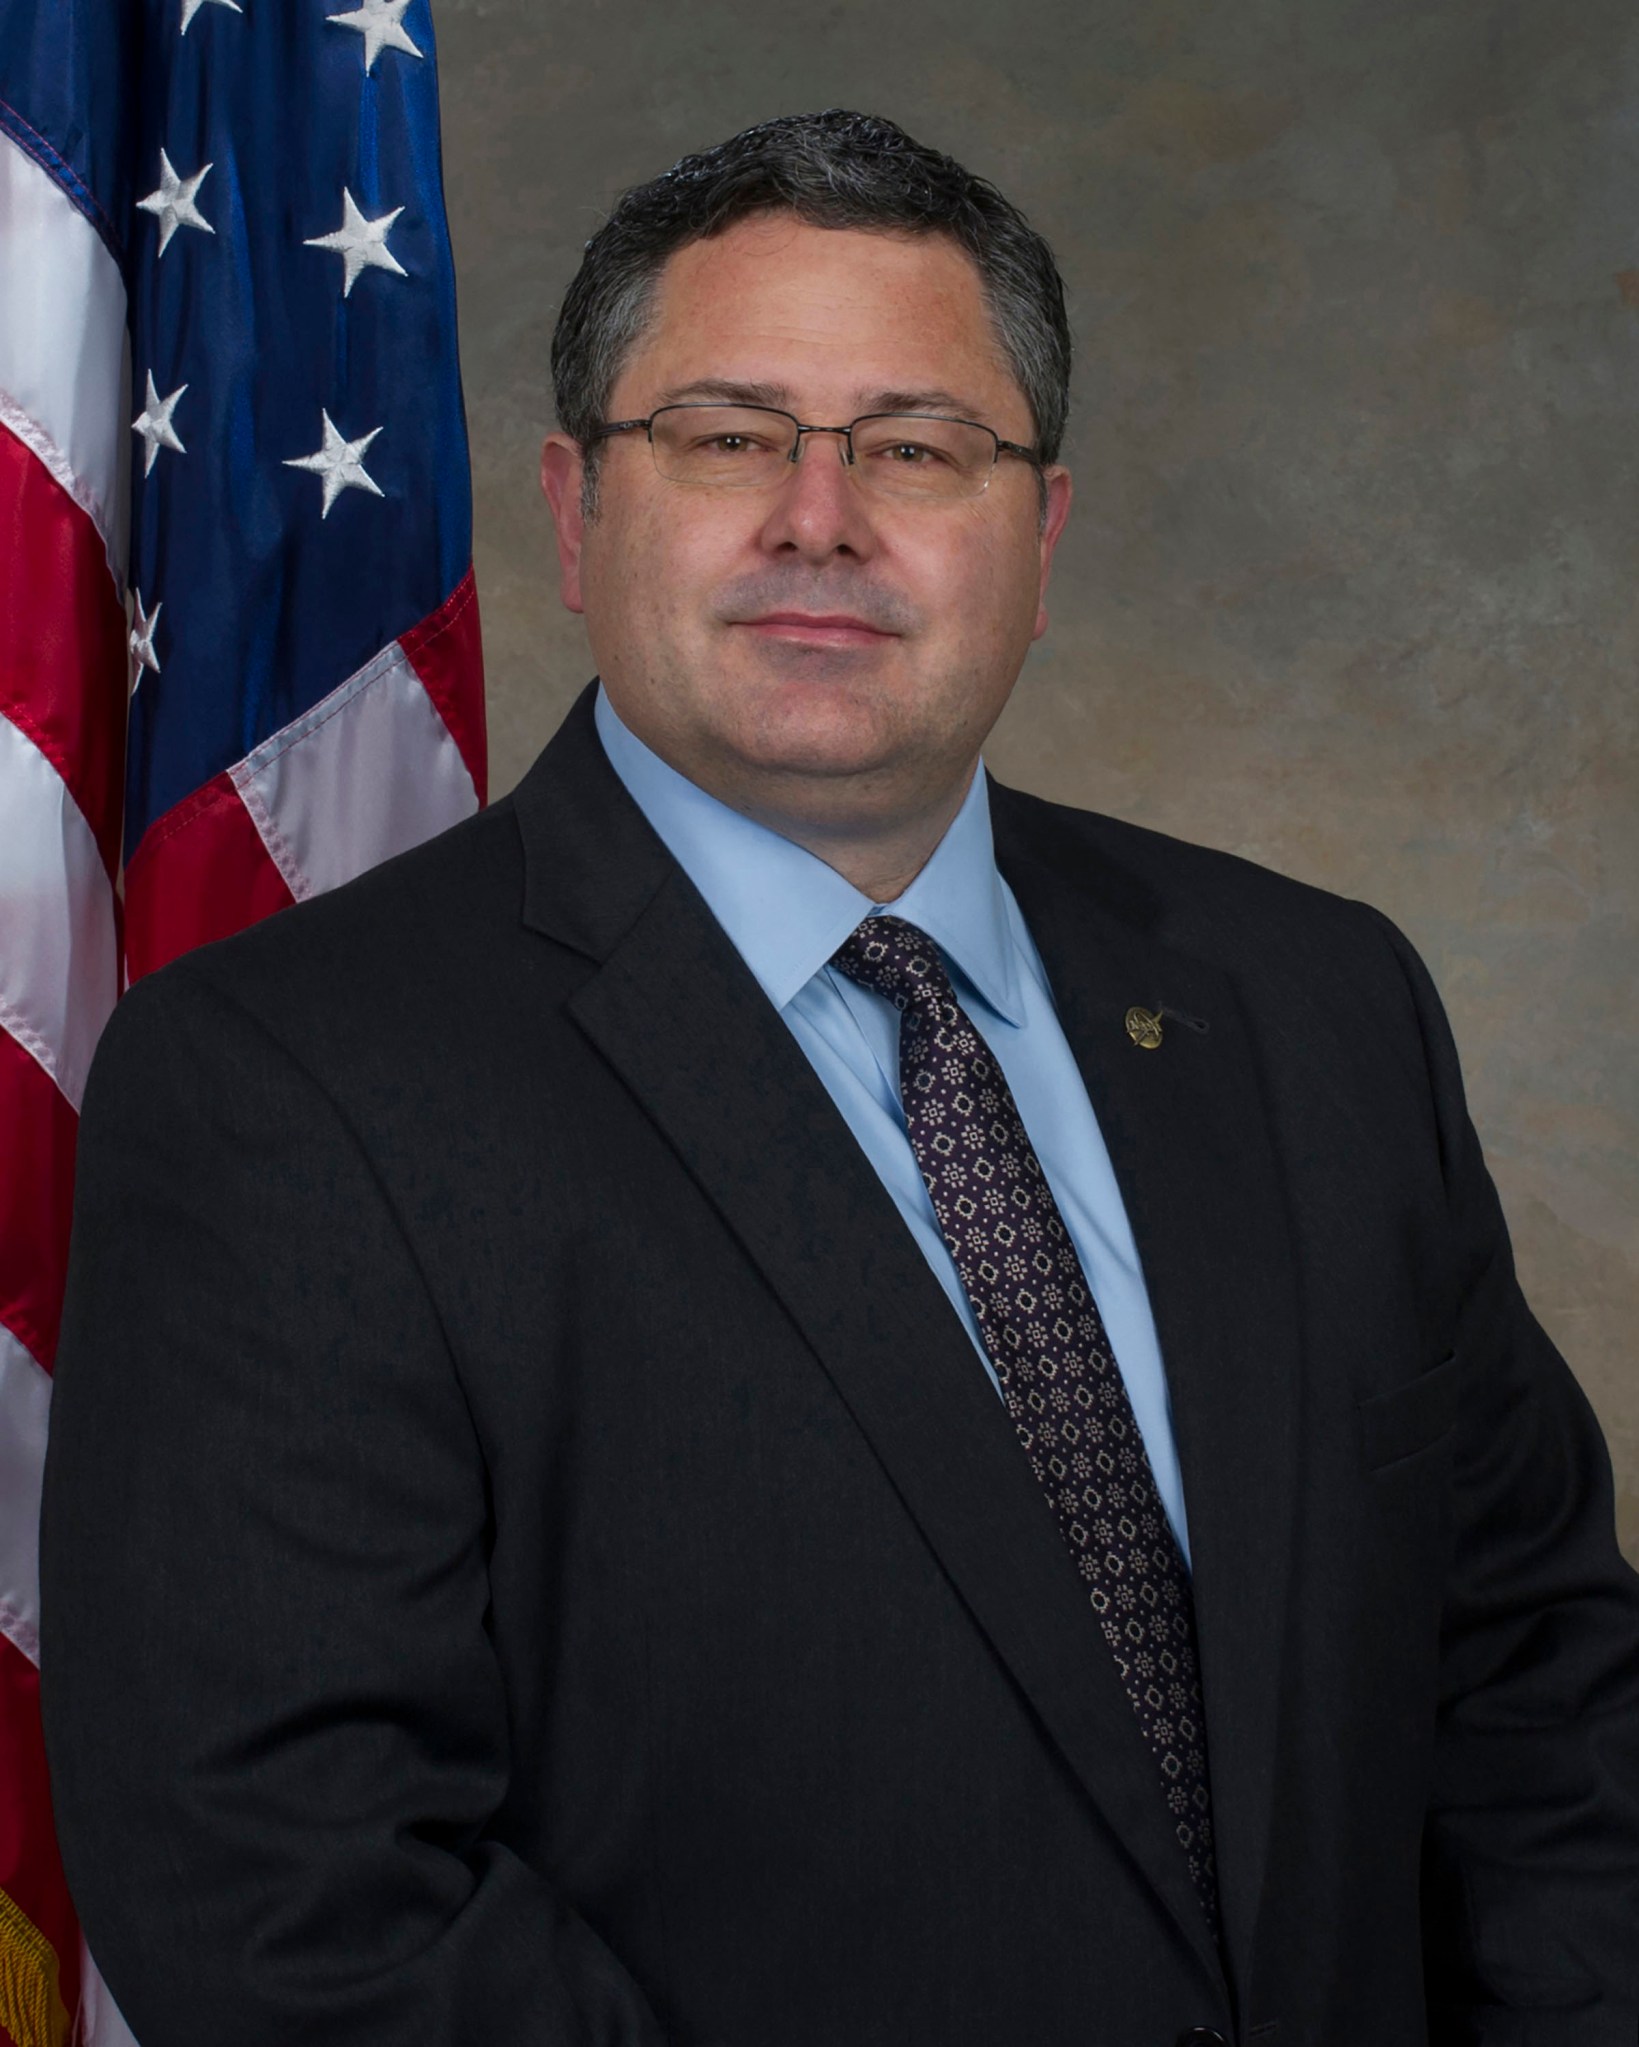 Todd May is acting director of NASA's Marshall Space Flight Center in Huntsville, Alabama.